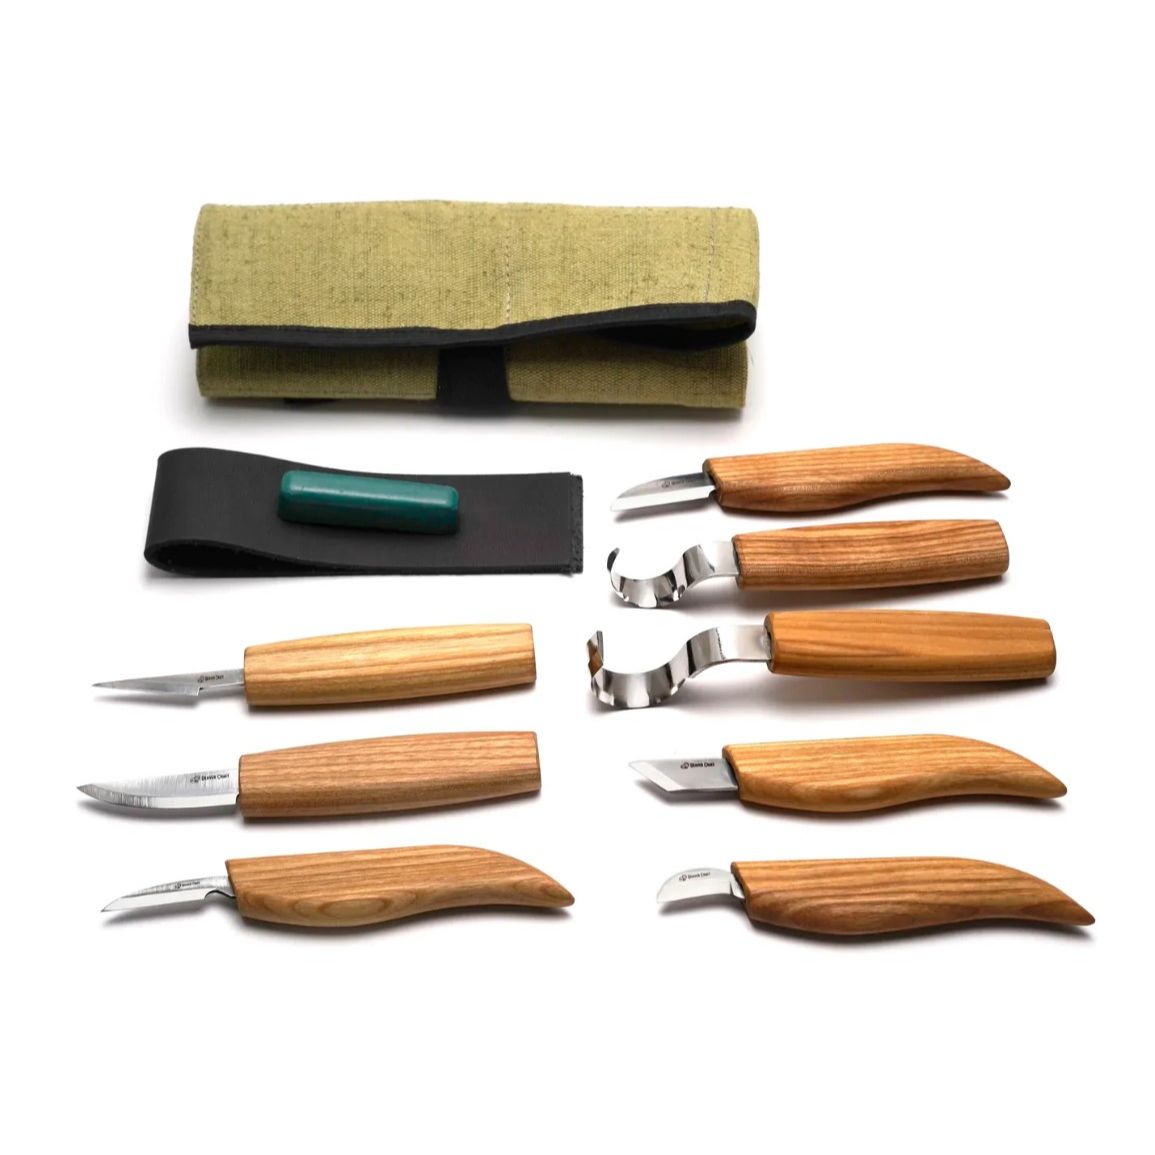 BeaverCraft Wood Carving Set of 8 Knives